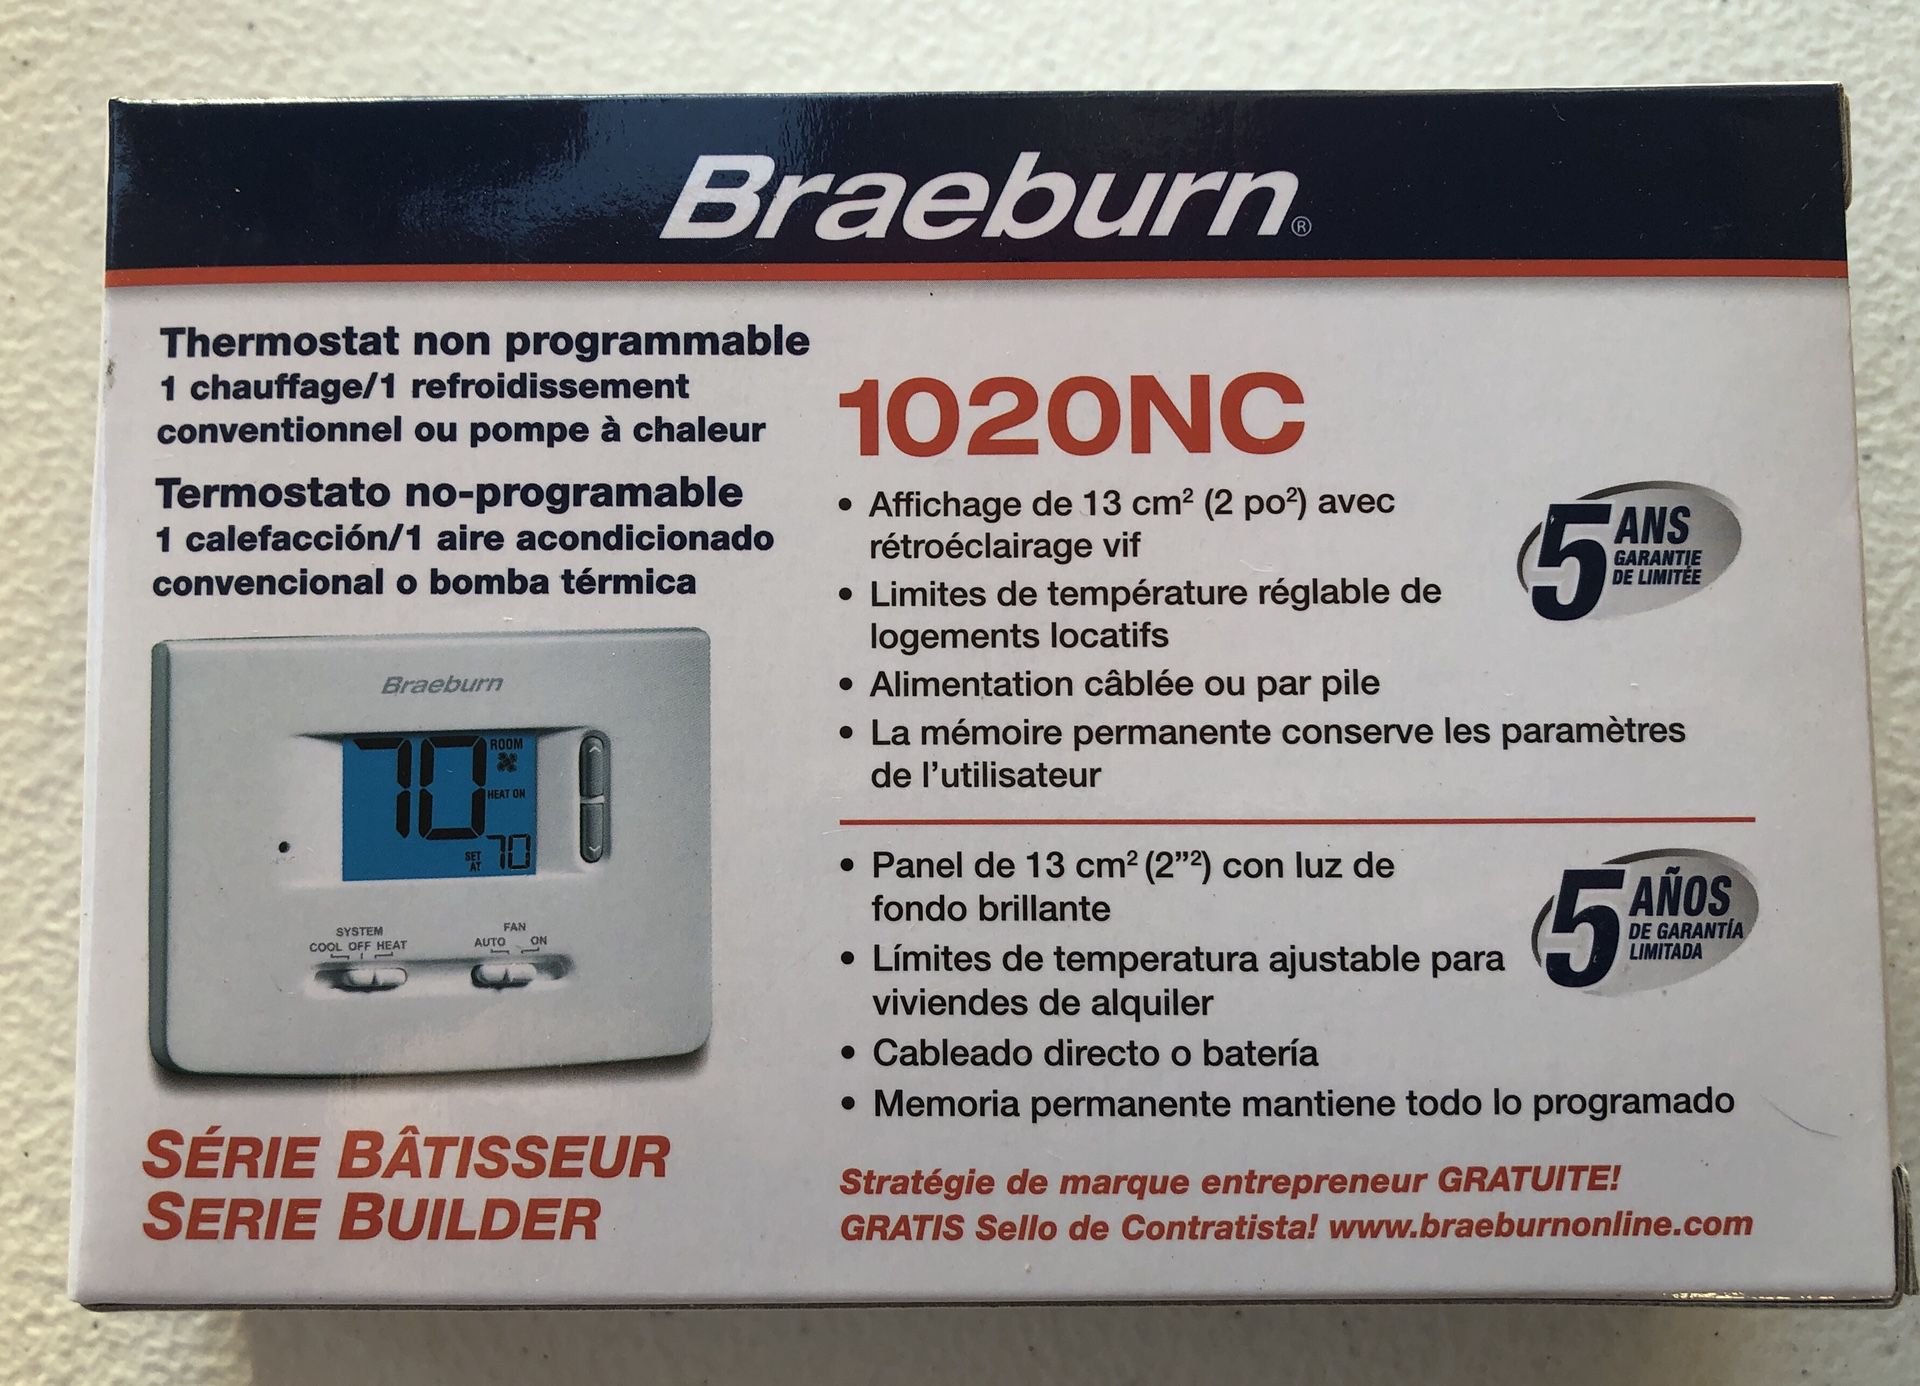 Braeburn Thermostat